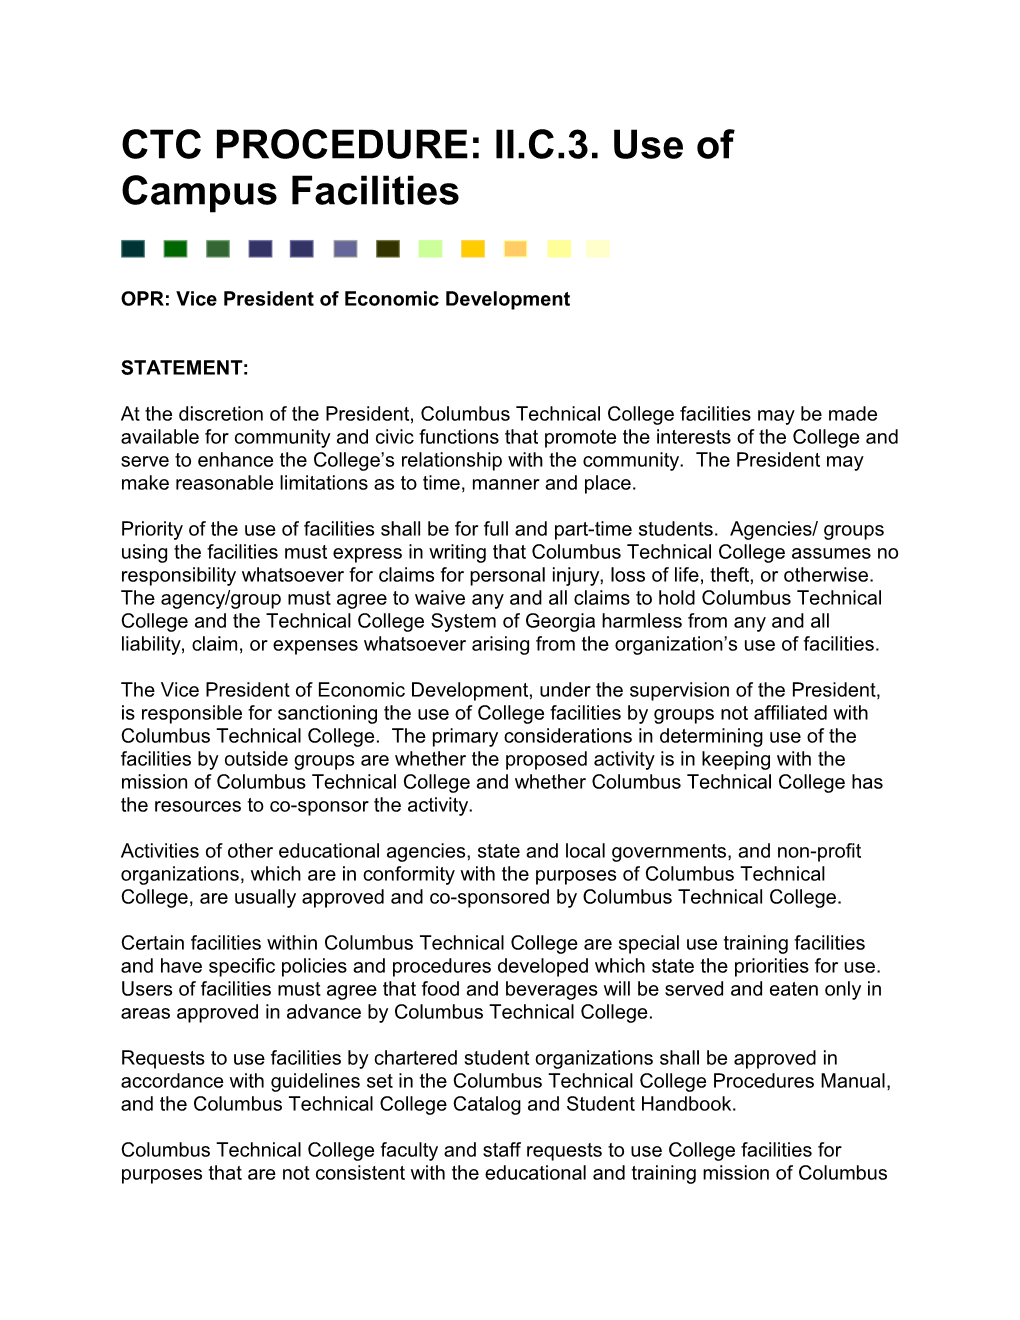 CTCPROCEDURE: II.C.3.Use of Campus Facilities